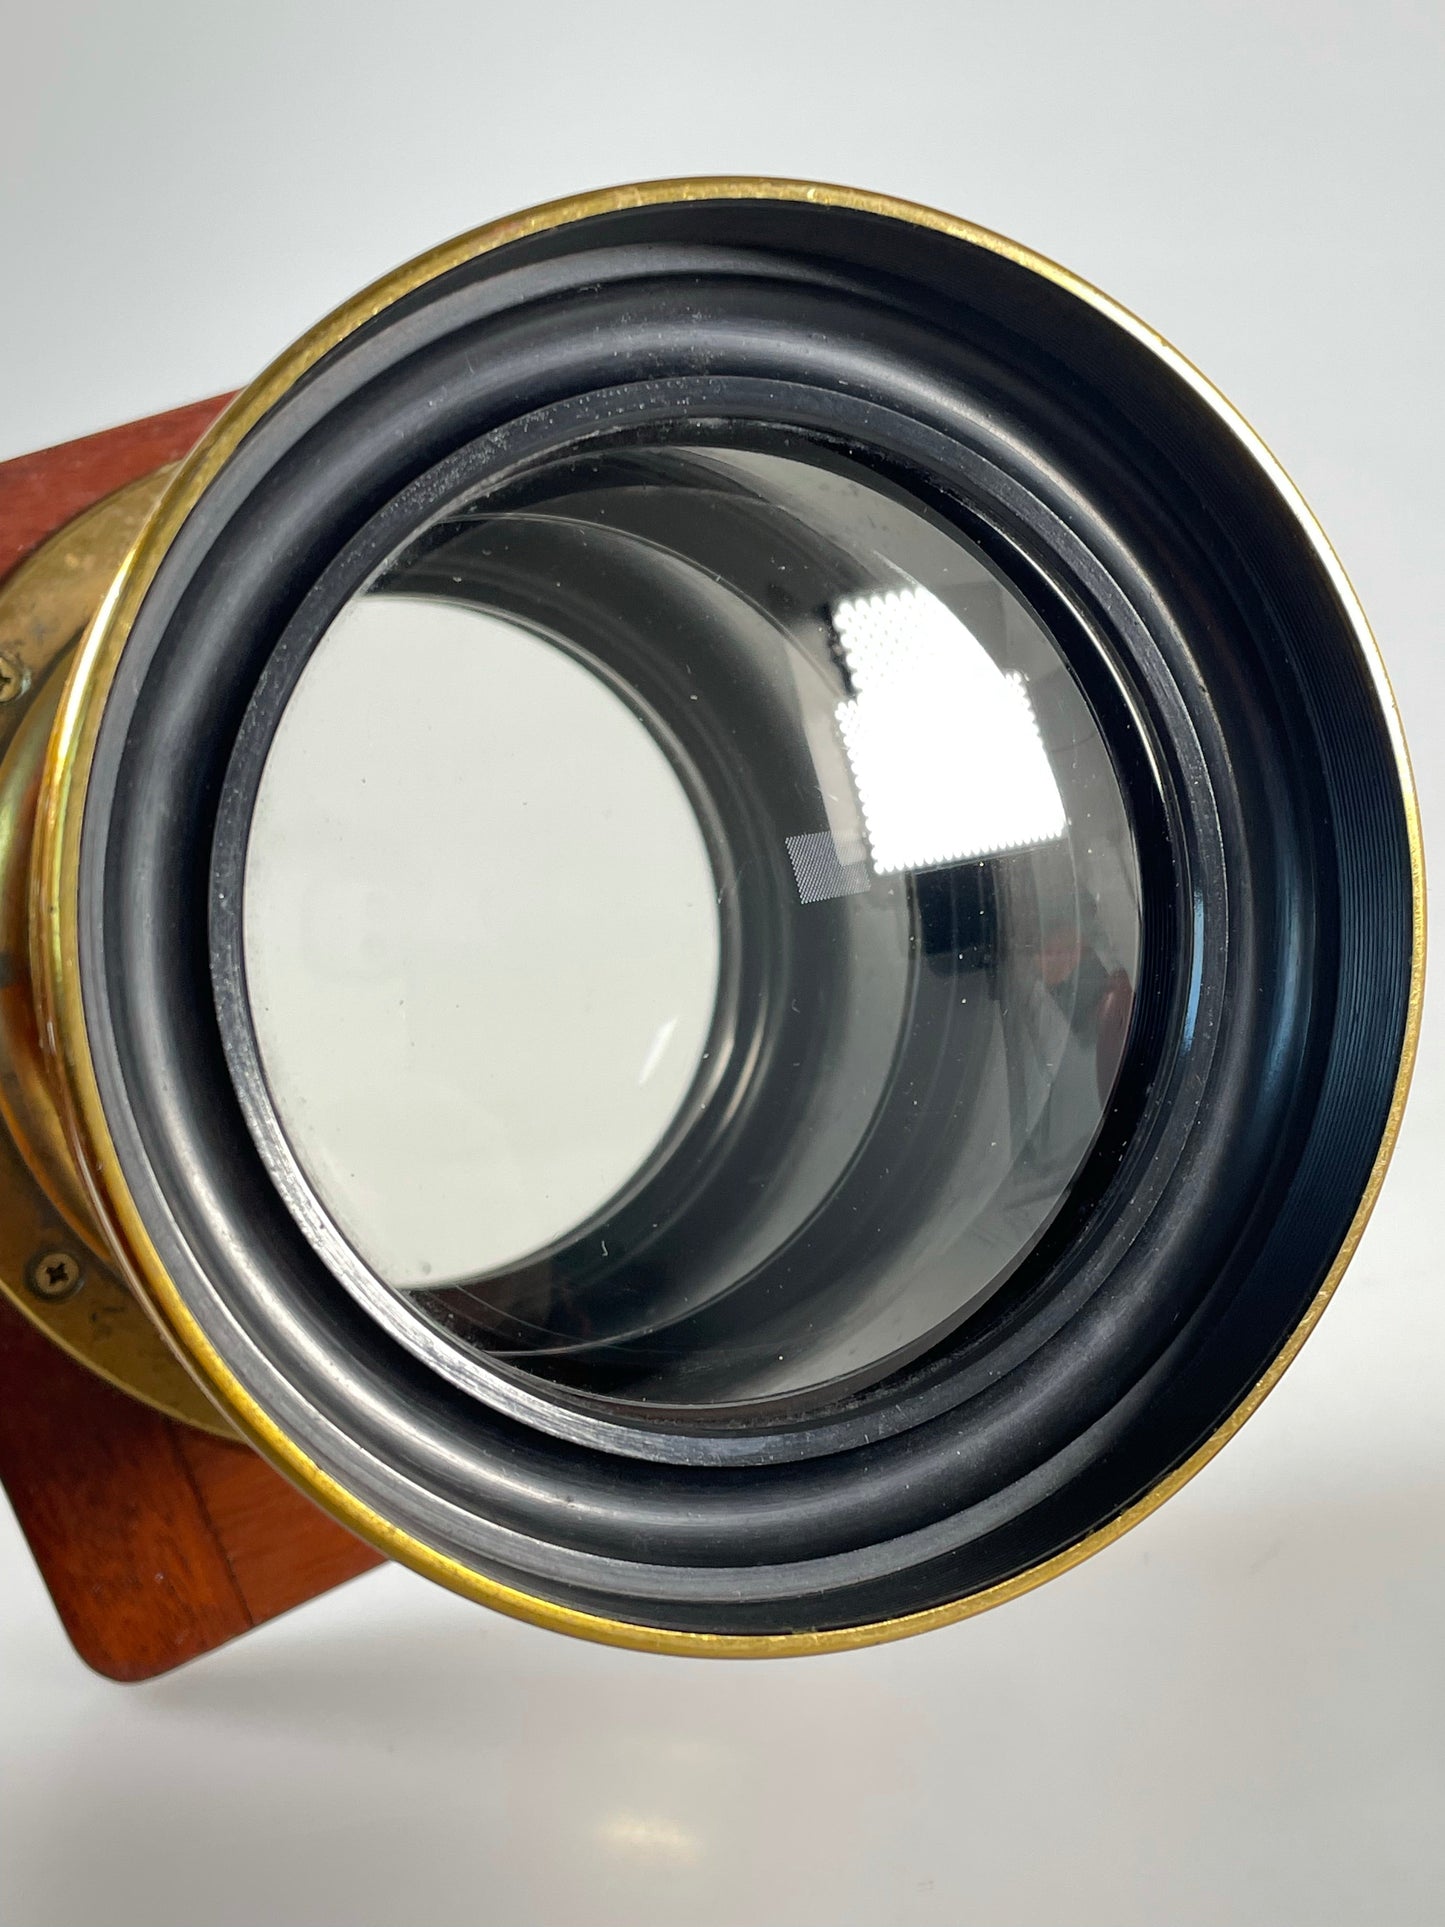 C.P.Goerz Berlin EXTRA-RAPID-LYNKEIOSKOP Serie C. No.9 brass Lens 600mm f/6